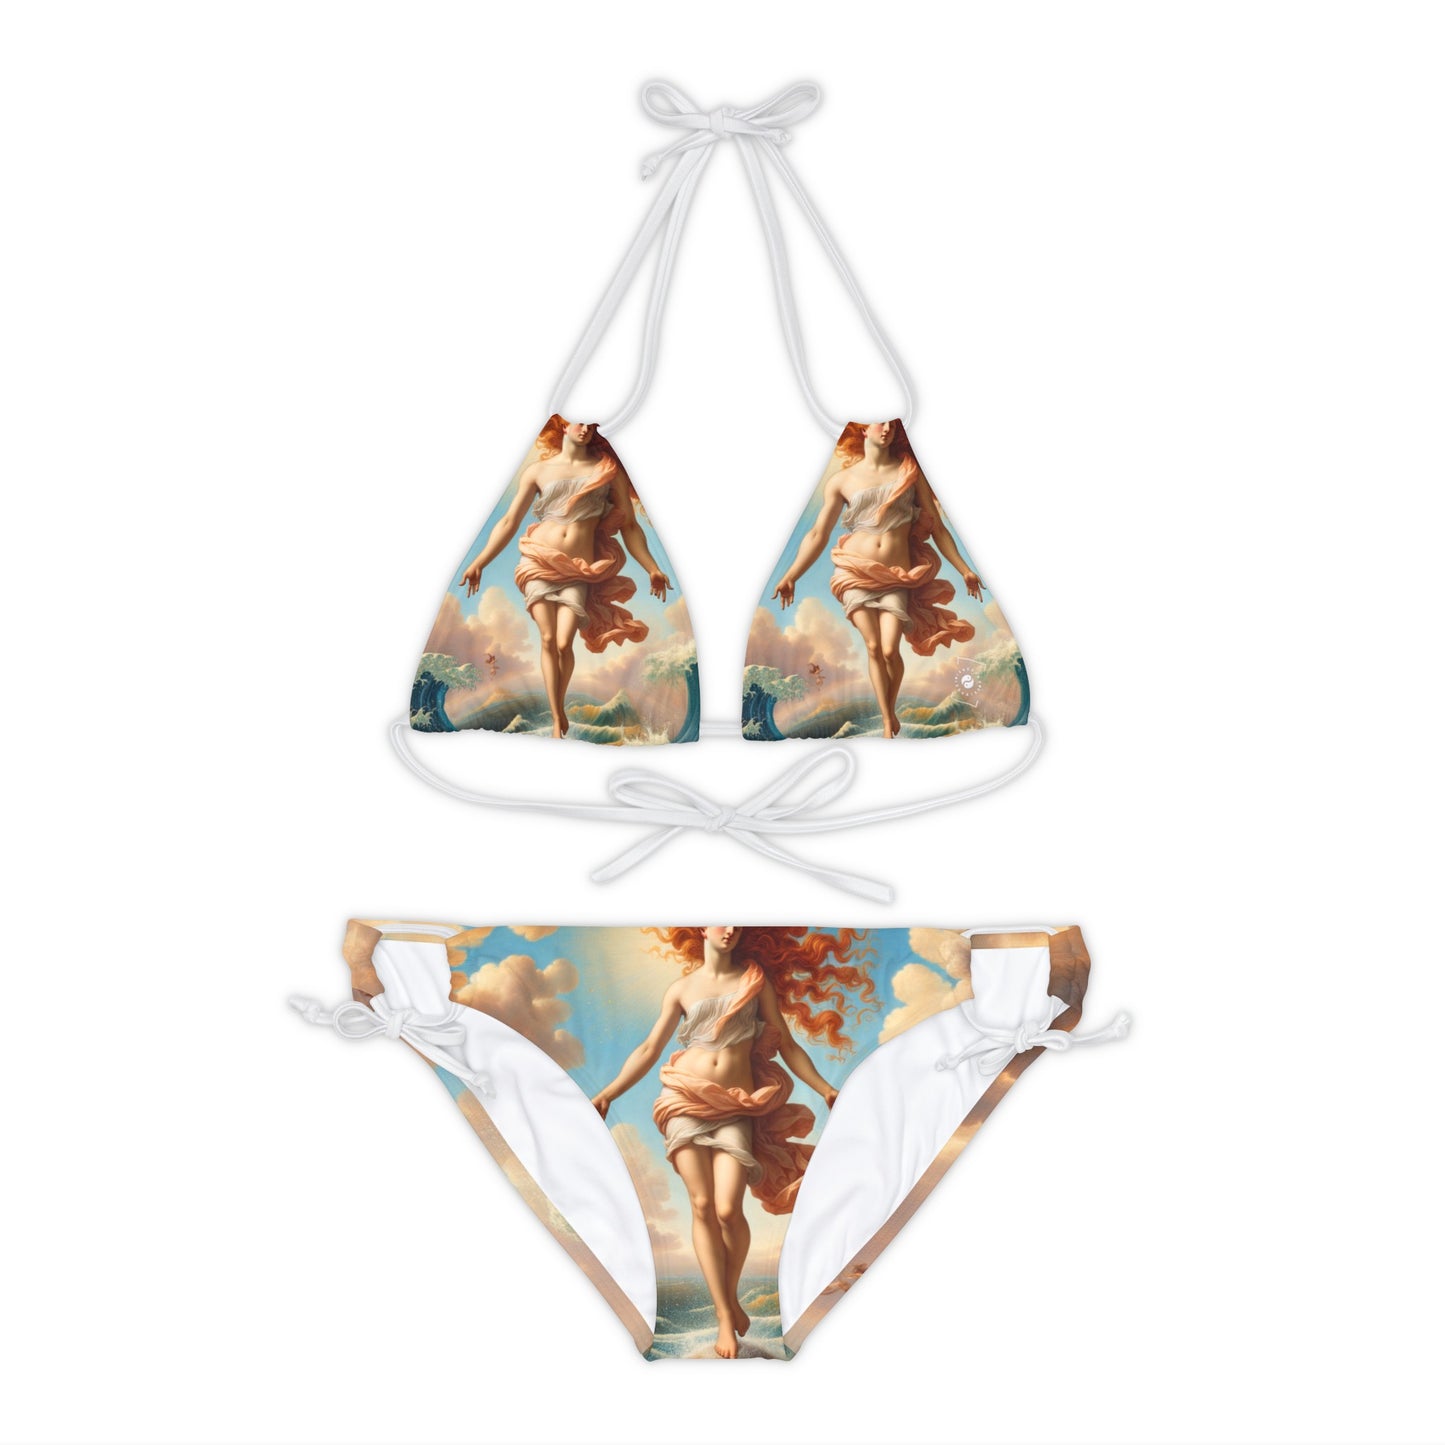 Rebirth of Venus - Lace-up Bikini Set